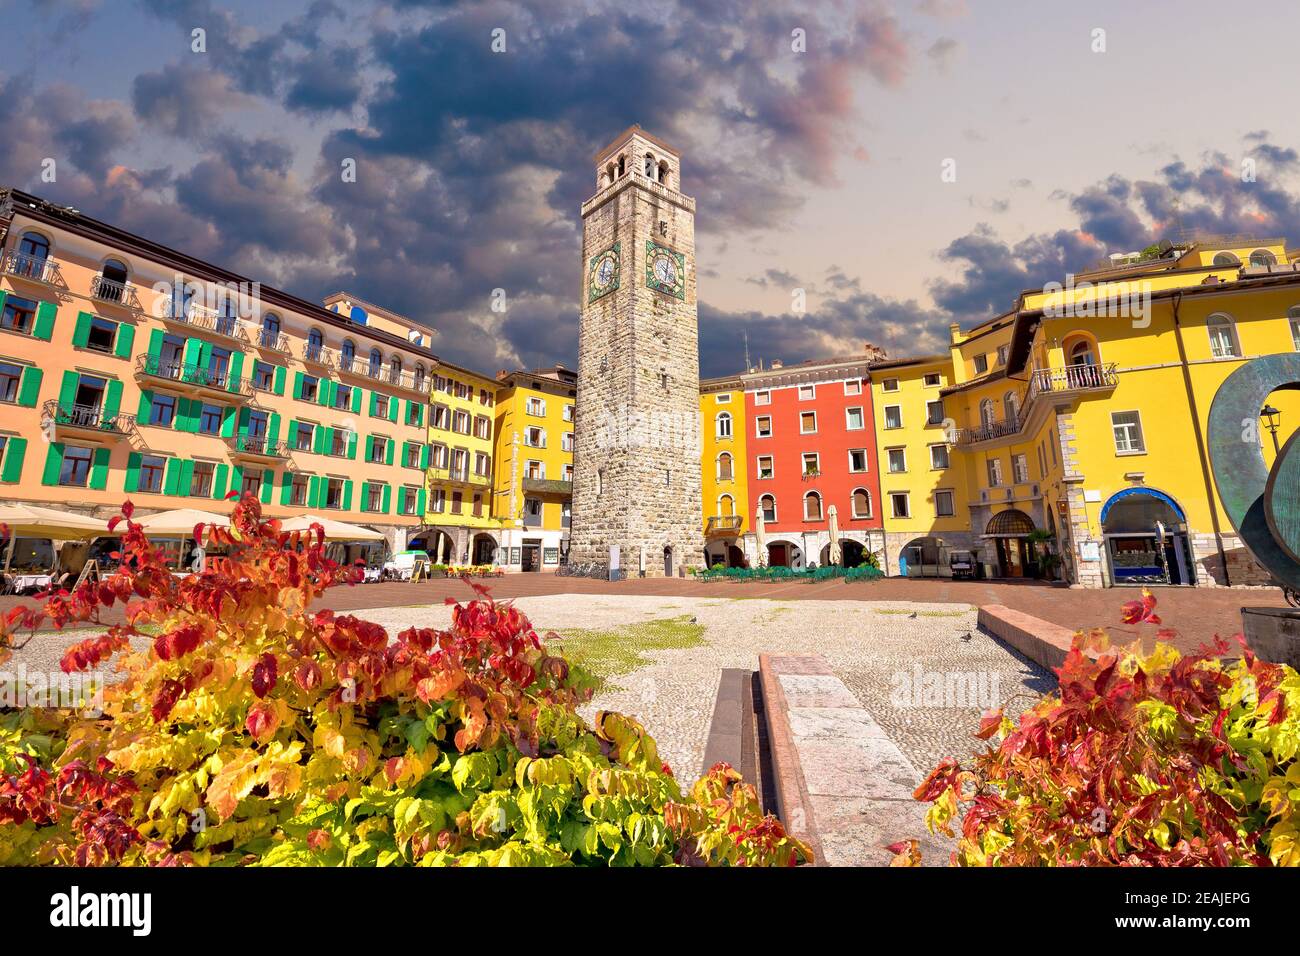 Farbenfroher italienischer Platz in Riva del Garda Stockfoto